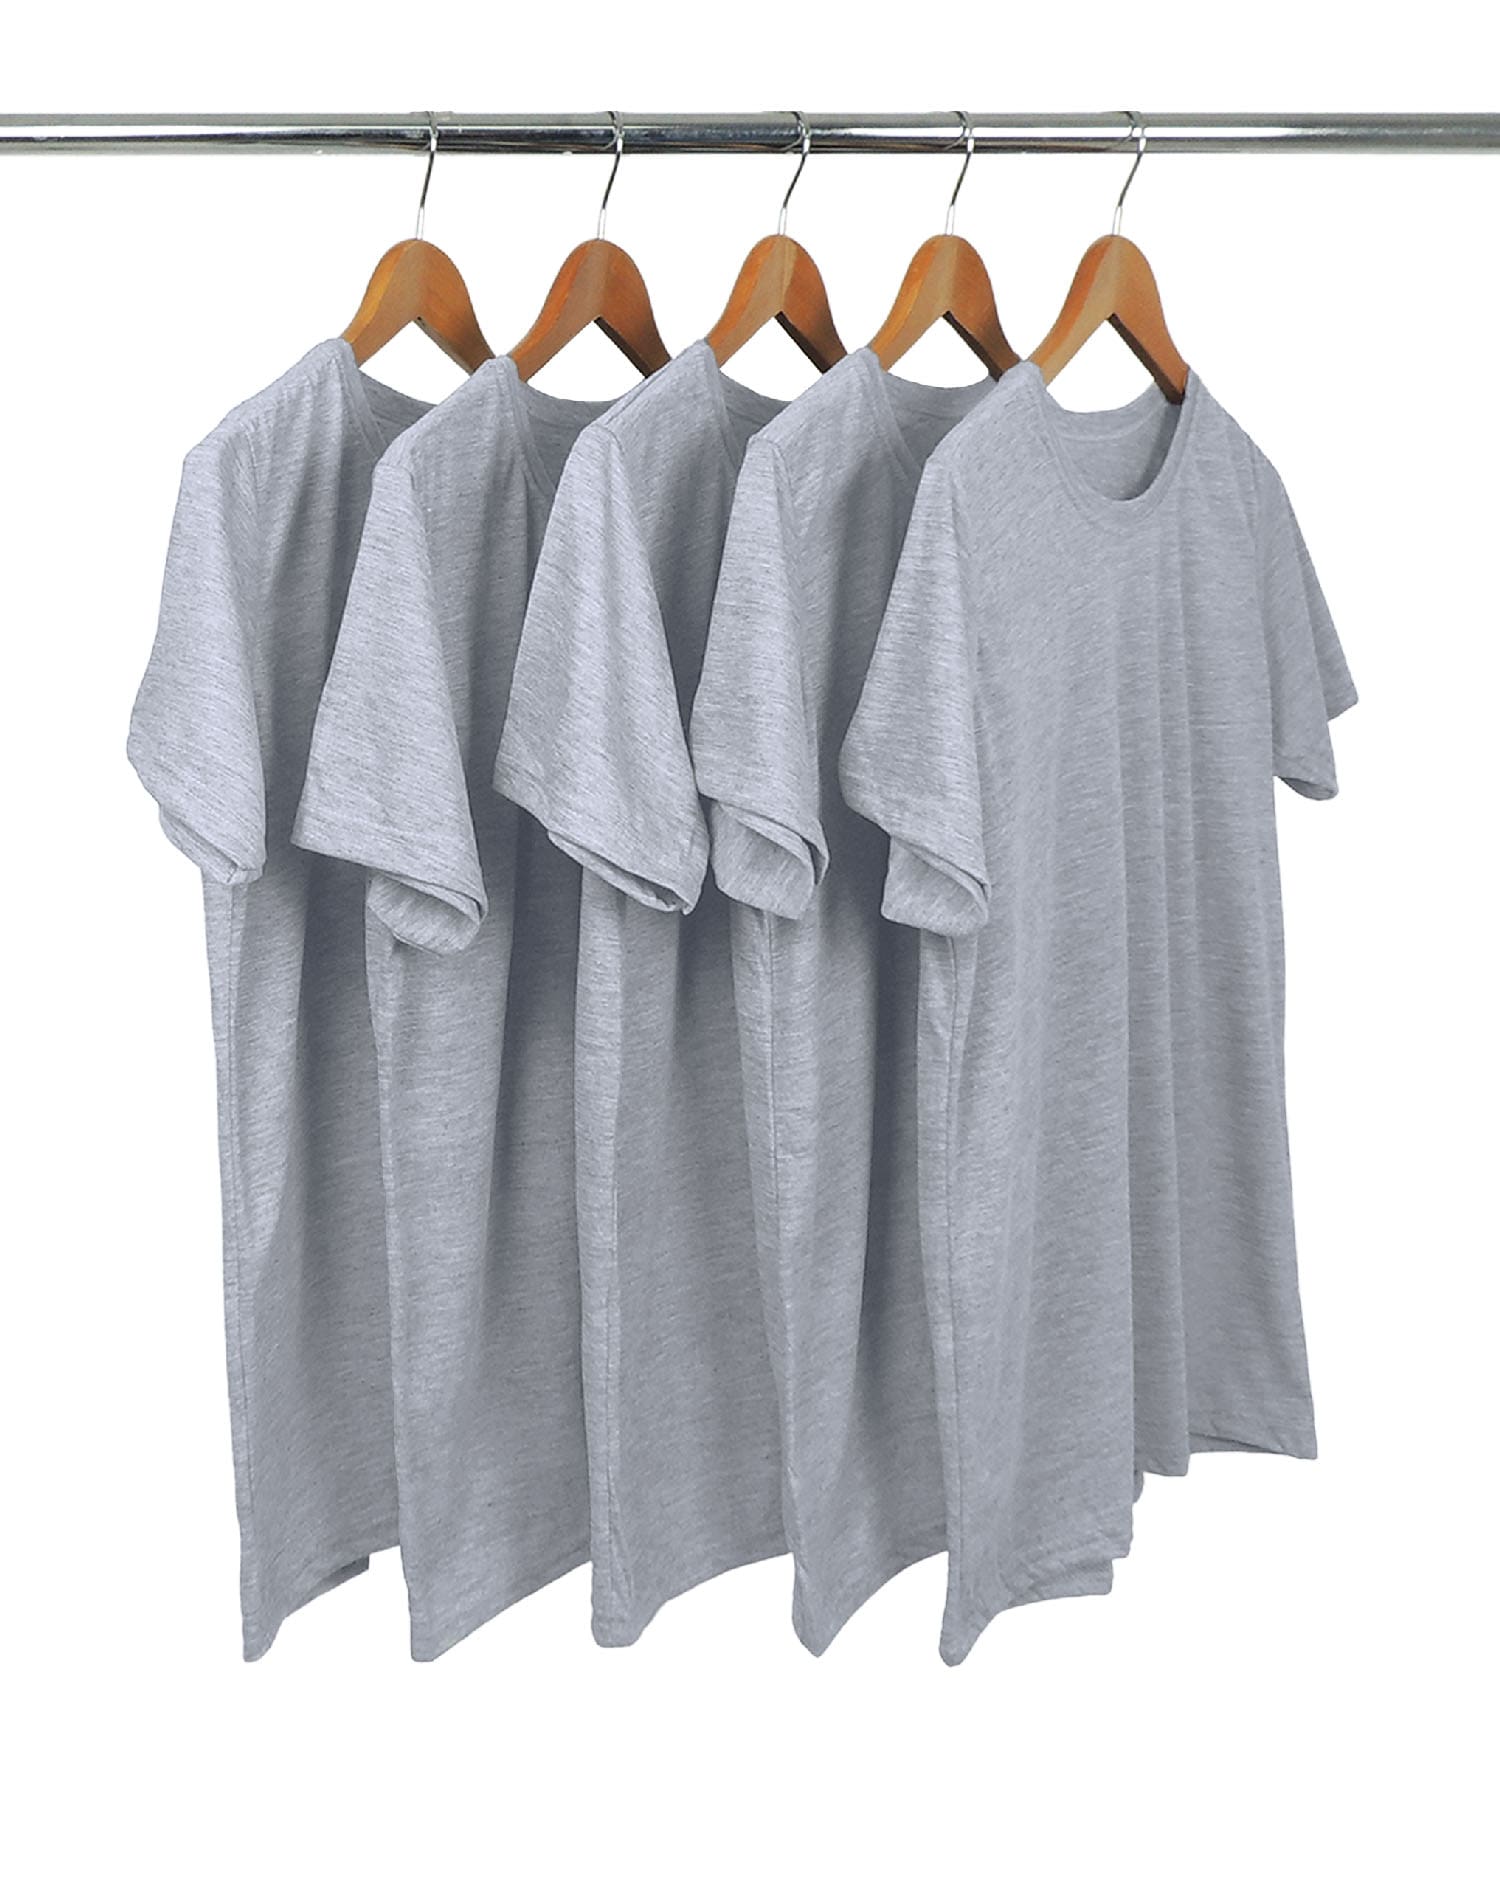 KIT 5 Camisetas de Poliéster/Sublimática Cinza Mescla